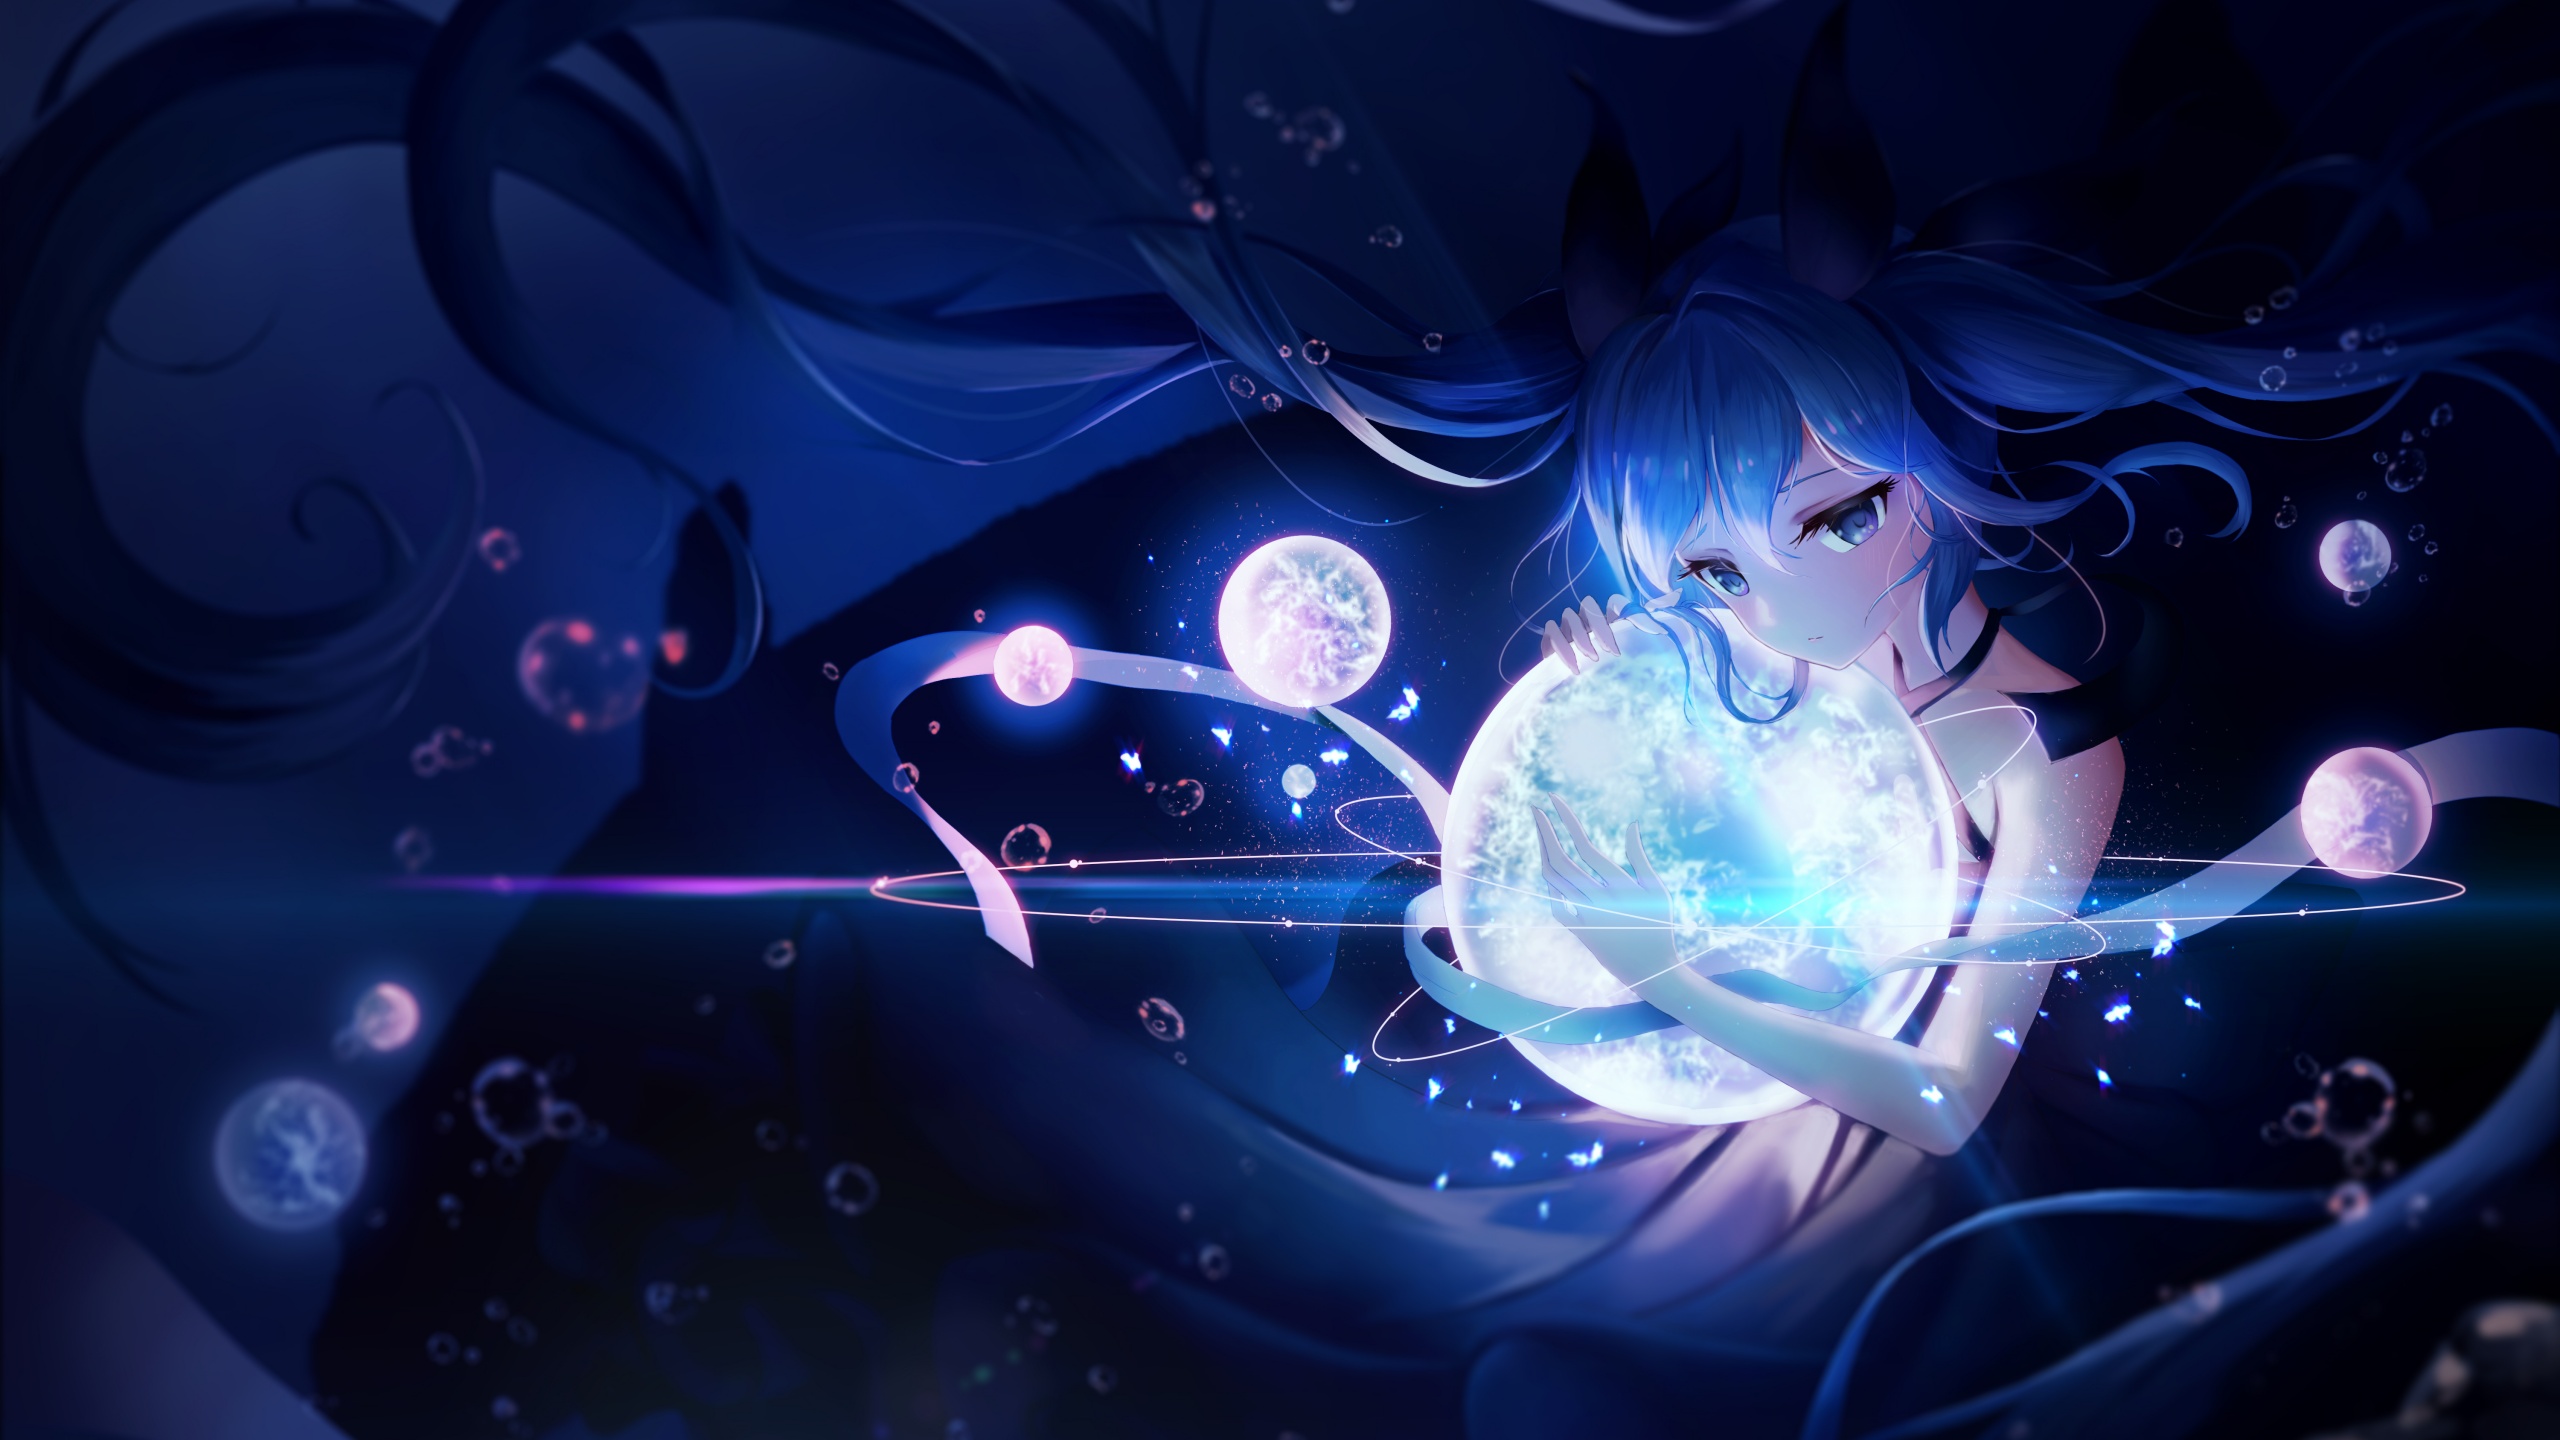 Hatsune Miku Wallpaper 4K, Anime girl, Dream, Cosmos, Universe, Magic, 5K, Fantasy